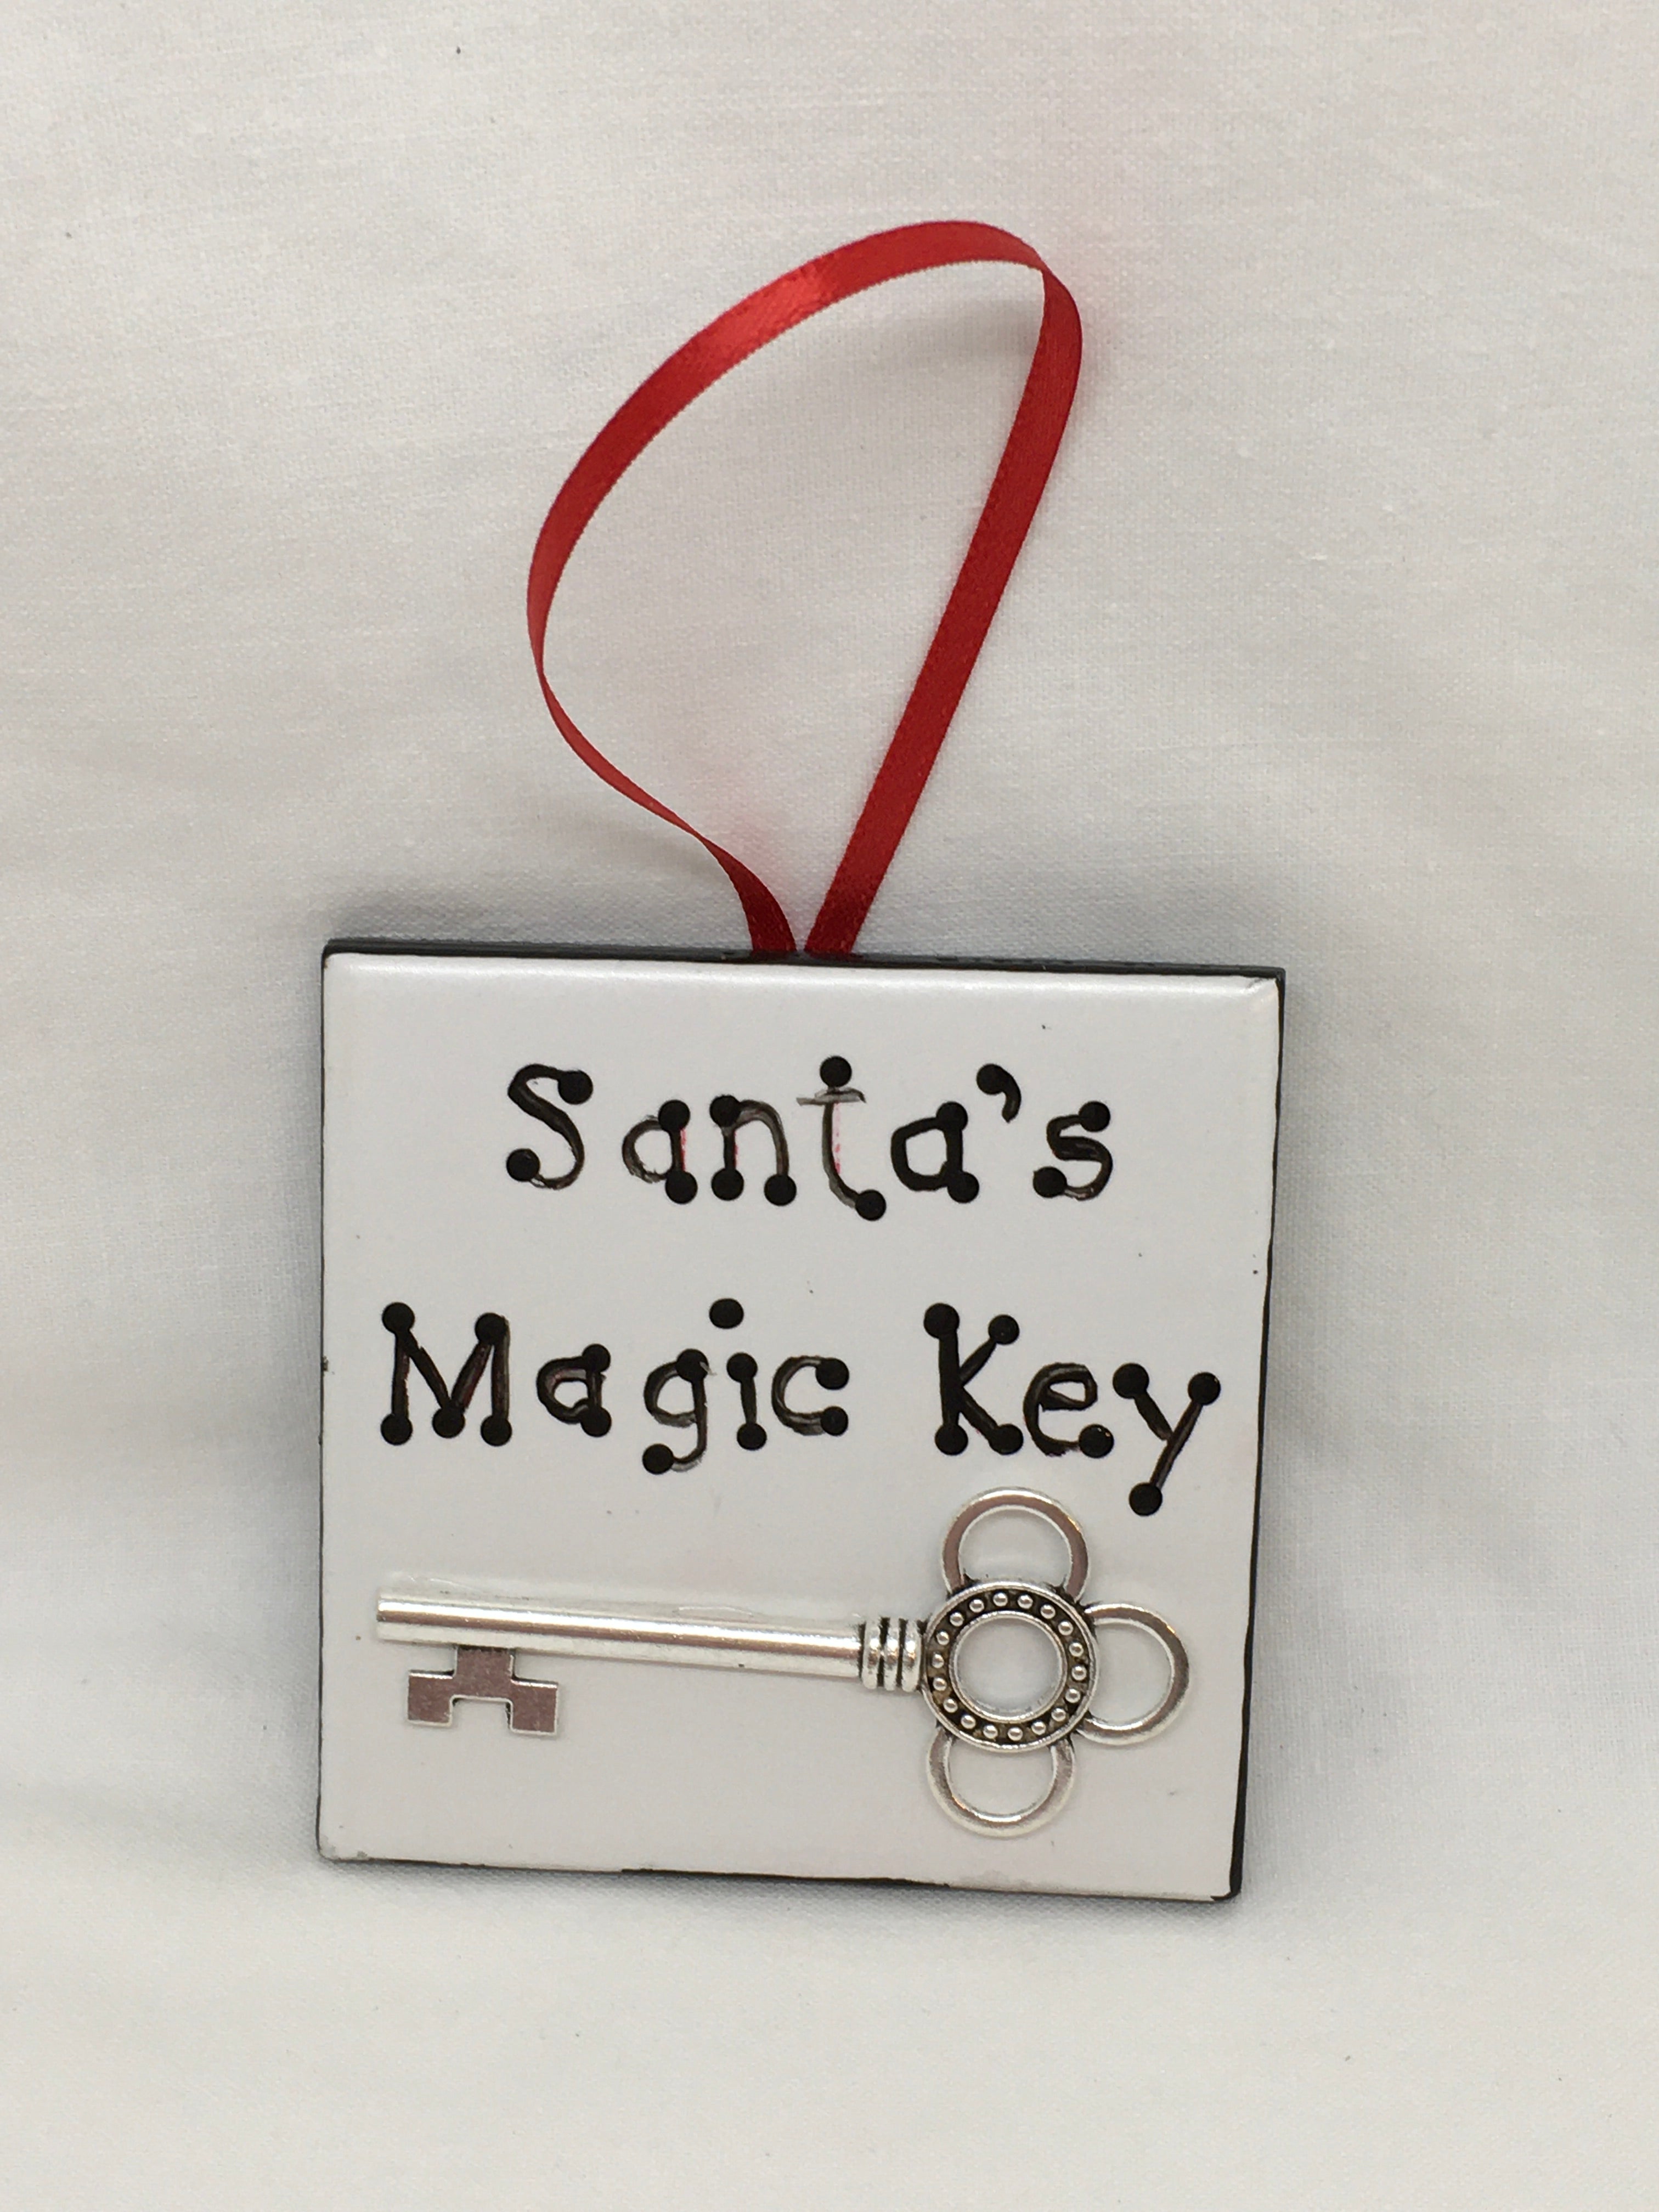 JAMsCraftCloset Ornaments Santas Magic Key Square 2 by 2 inch Ceramic Tile with Poem Christmas Decor Gun Metal Key